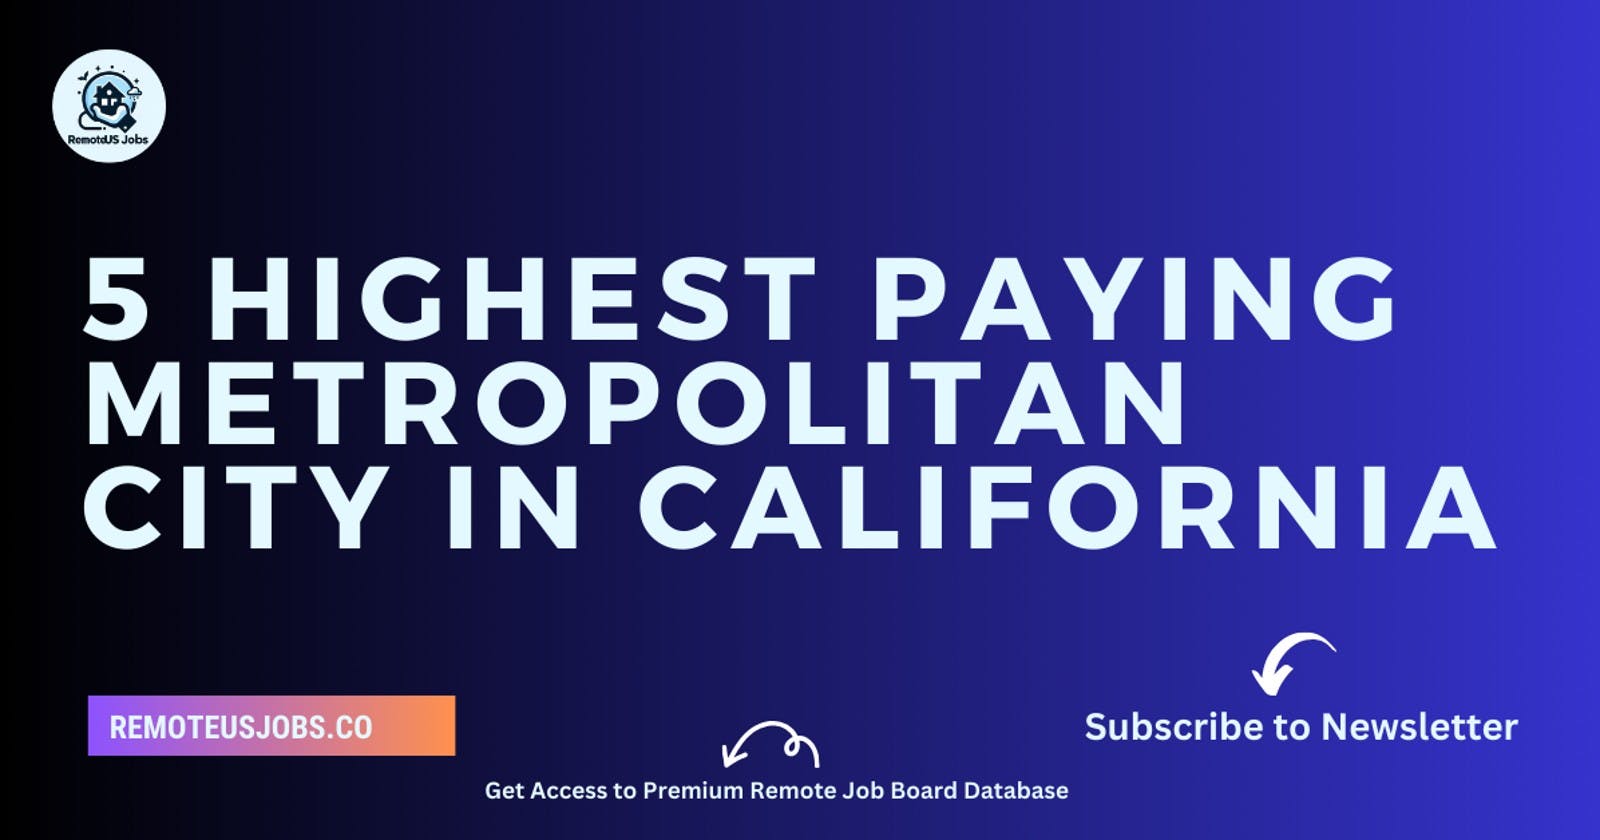 5 Highest Paying Metropolitan City in California